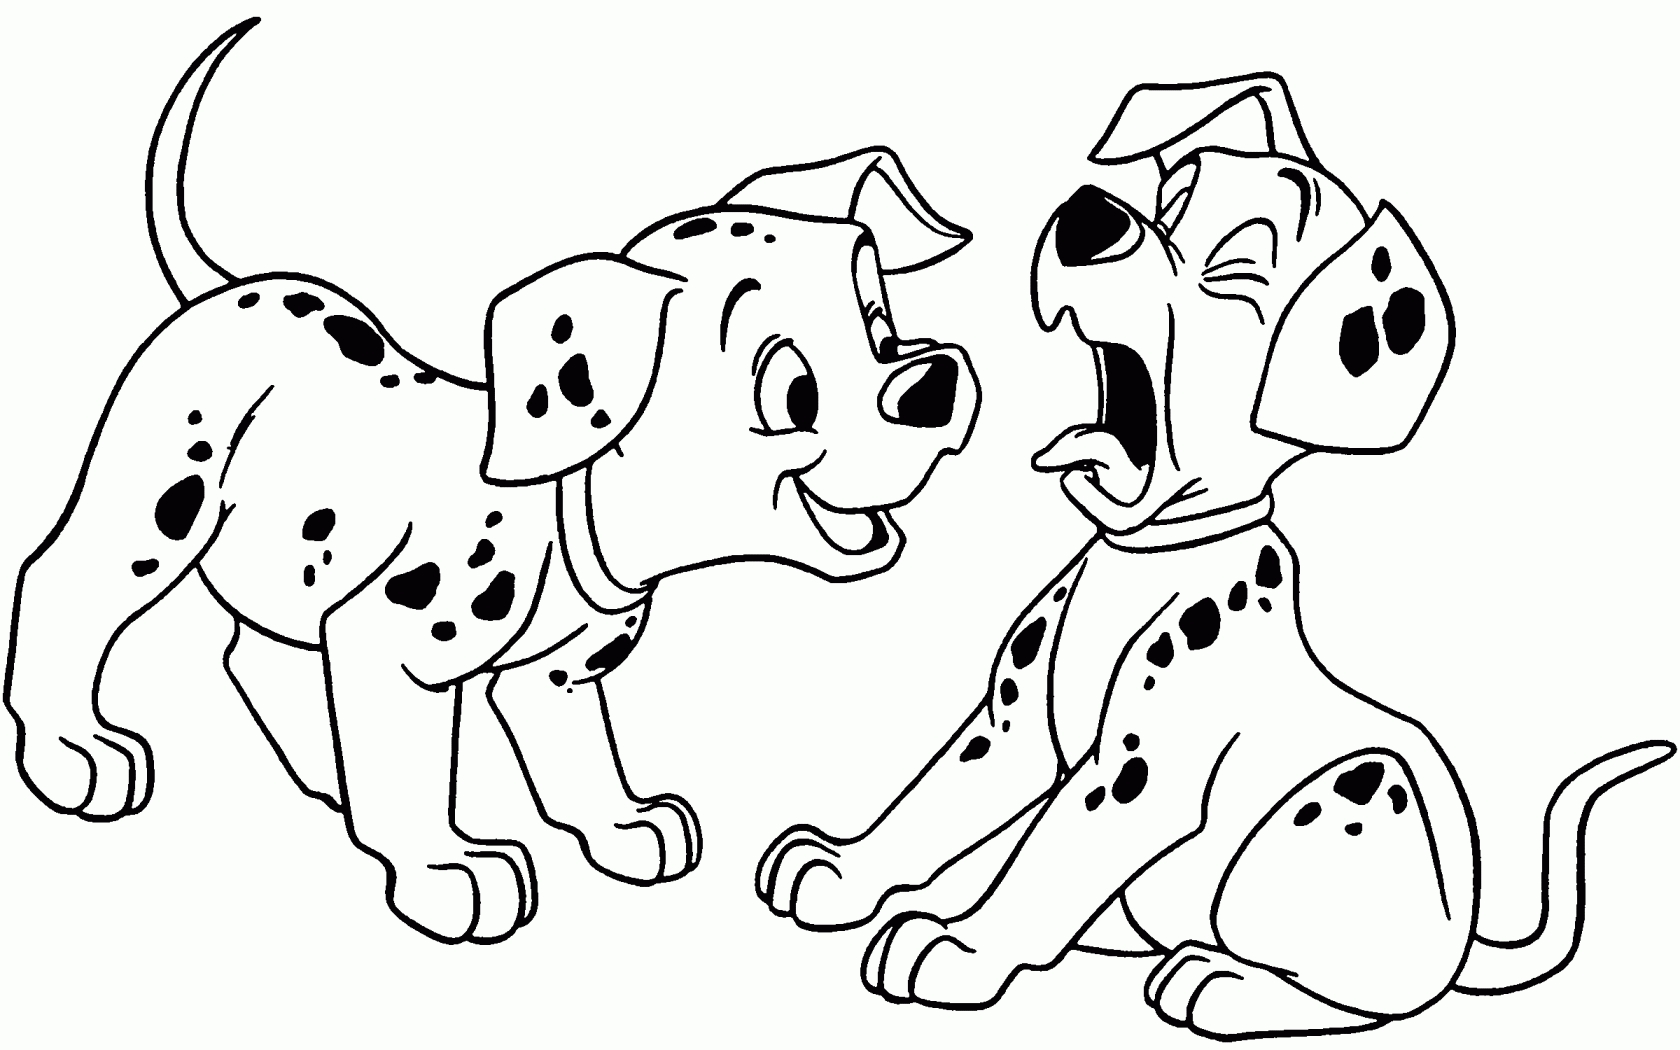 Dalmation Dog Coloring Page at GetColorings.com | Free printable